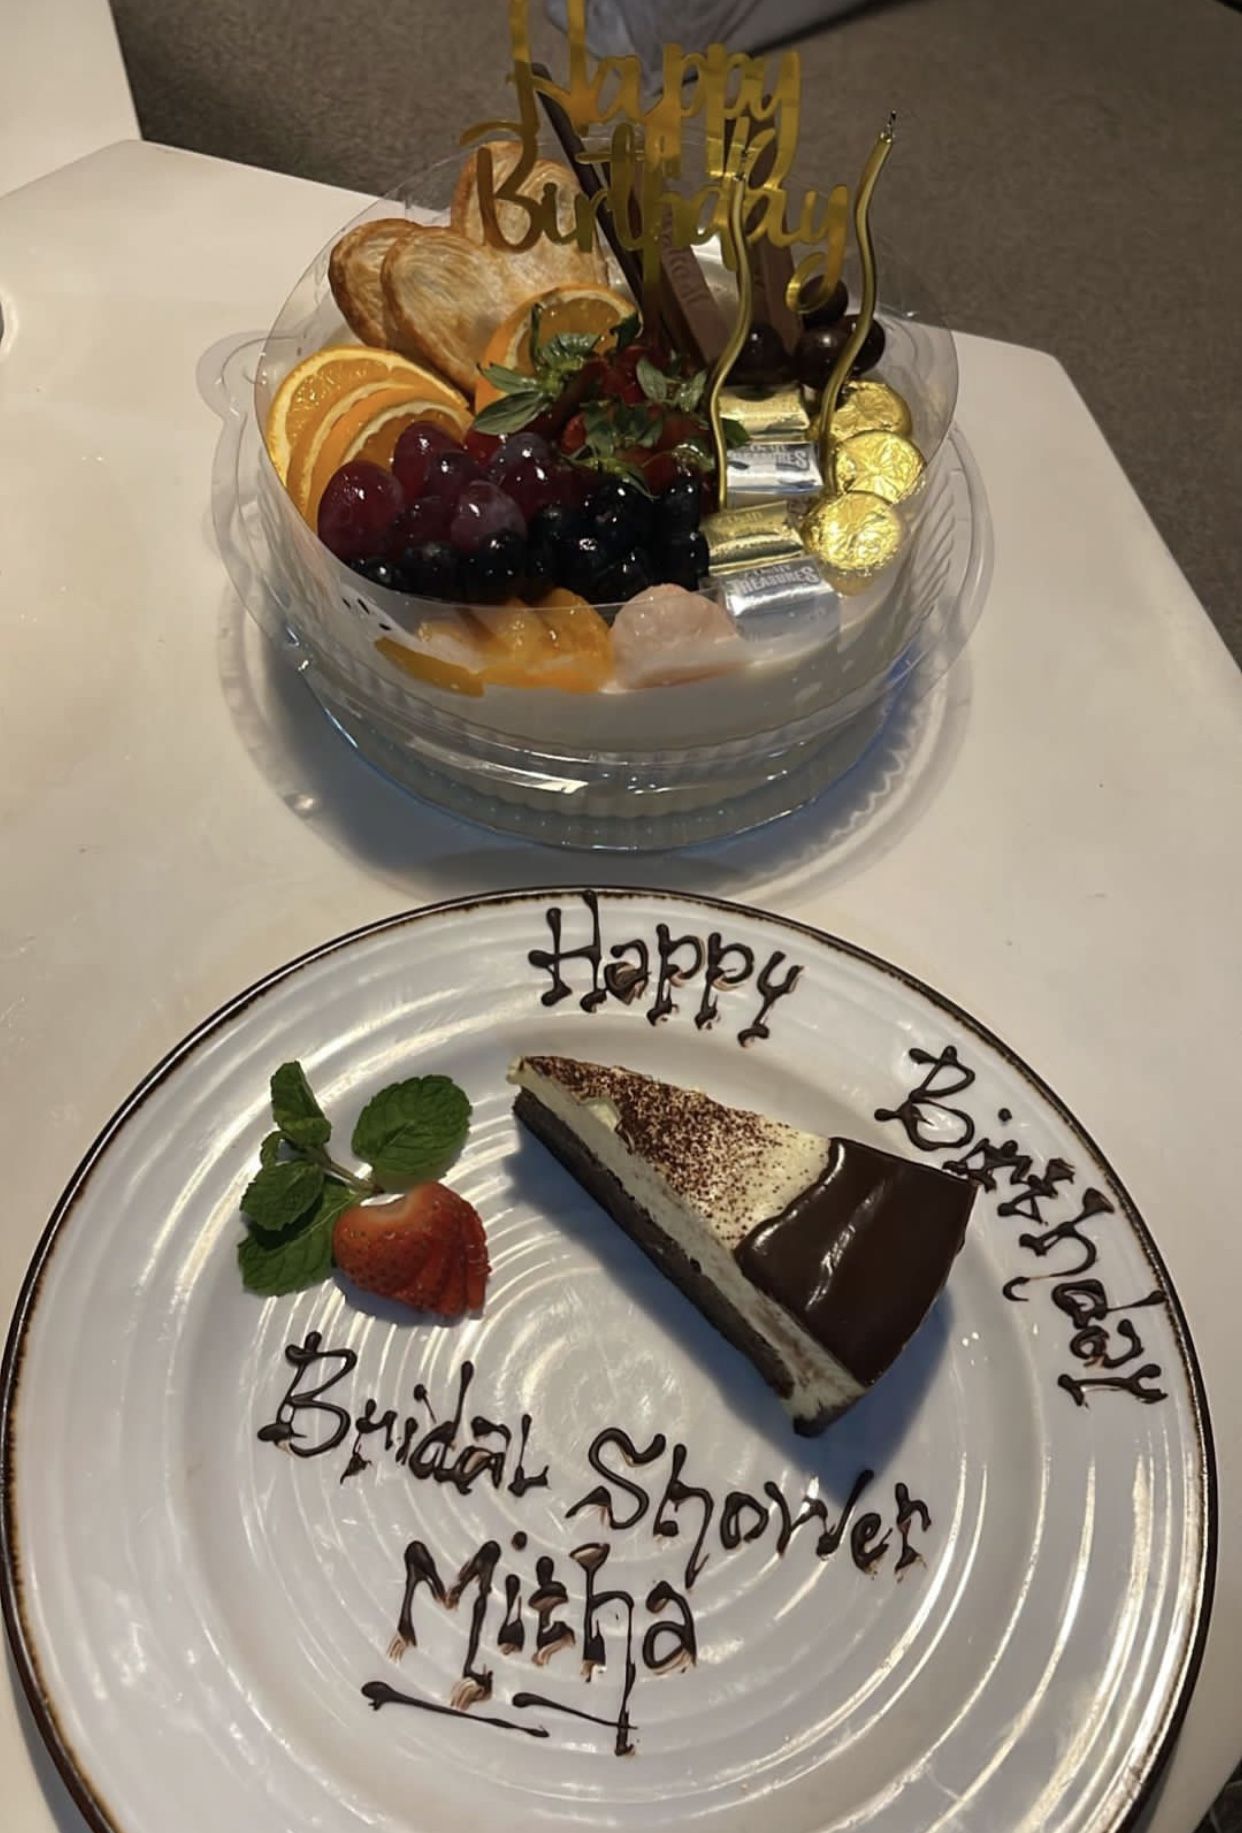 Potret kue bertuliskan Happy Birthday dan Bridal Shower